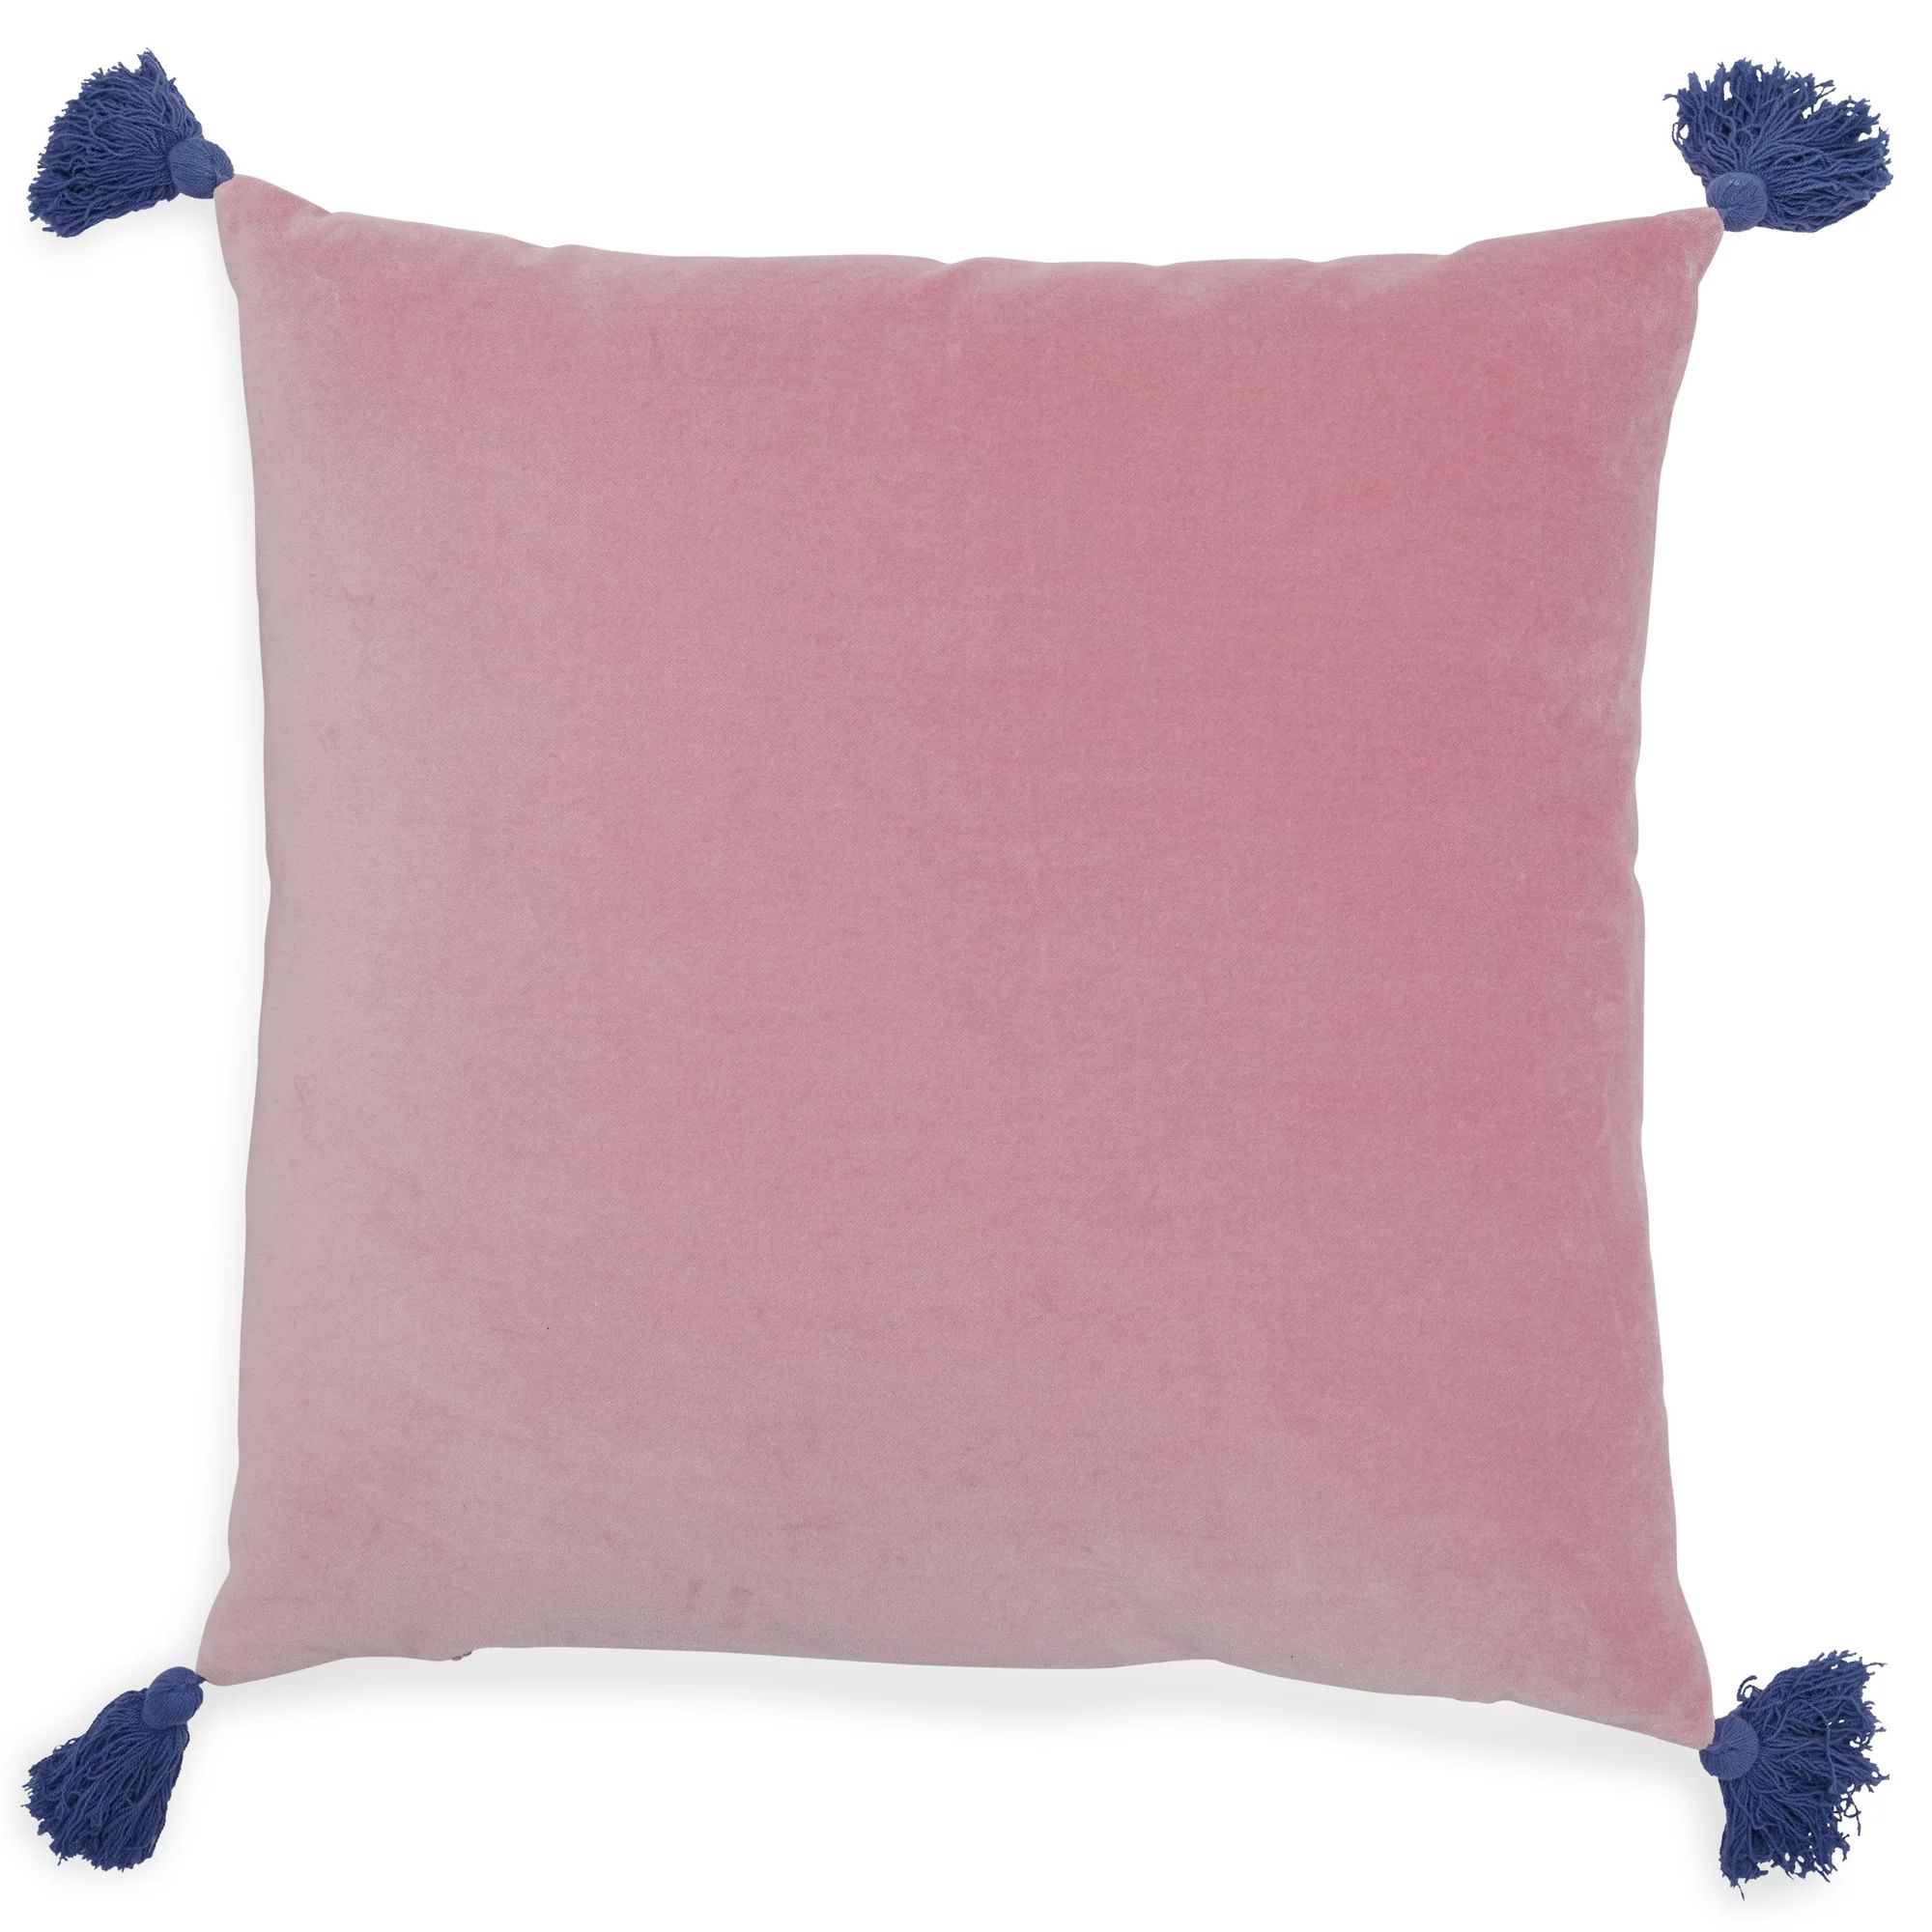 Velvet Decorative Throw Pillow with Tassels, 20x20" by Drew Barrymore Flower Home | Walmart (US)